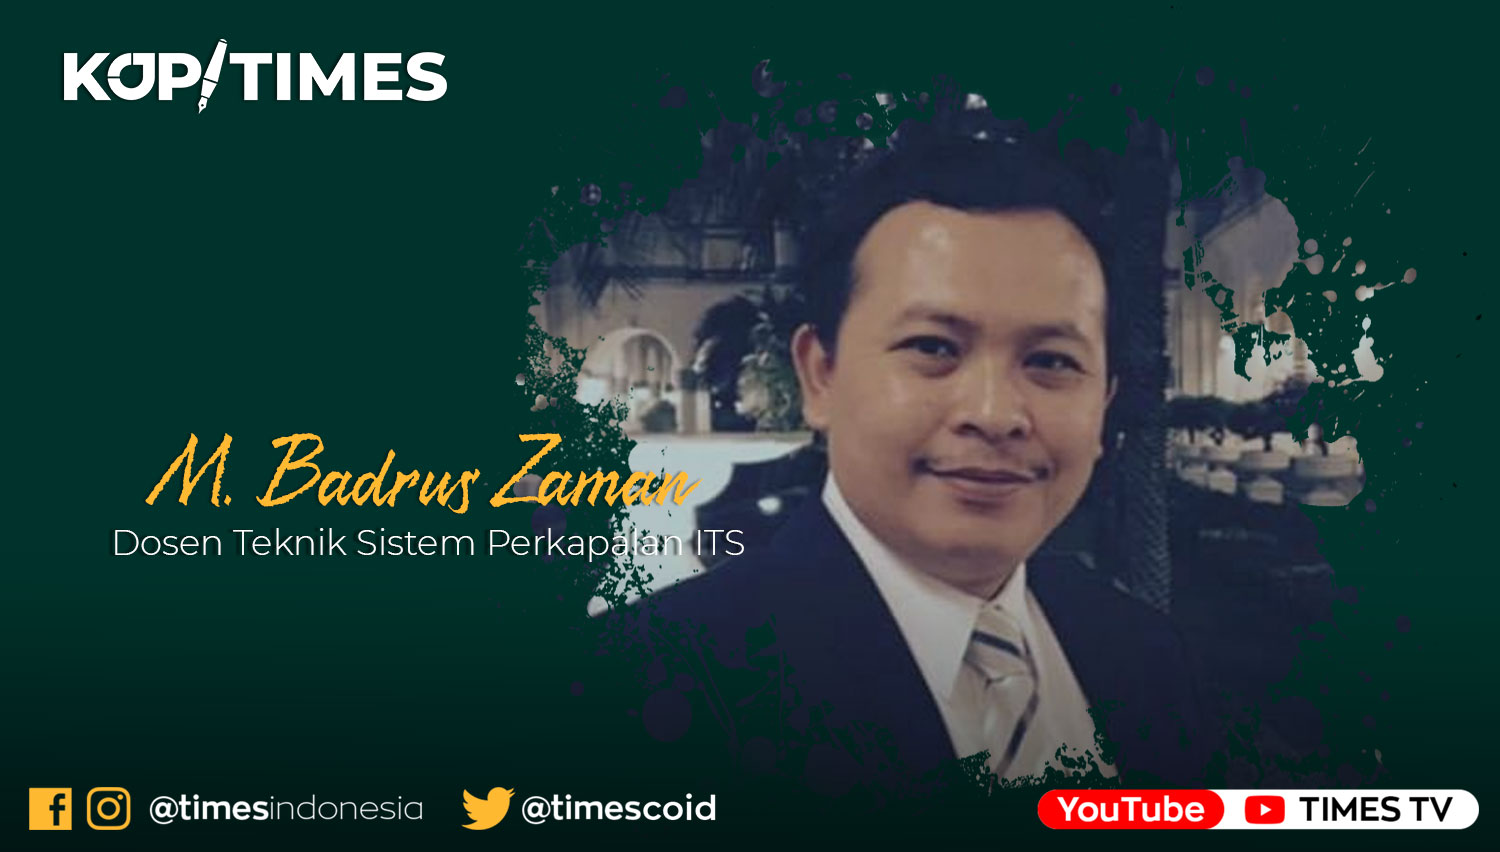 Dr Ir M. Badrus Zaman, Dosen Teknik Sistem Perkapalan ITS, Founder ROTALINDO (Rotasi Teknologi Indonesia)